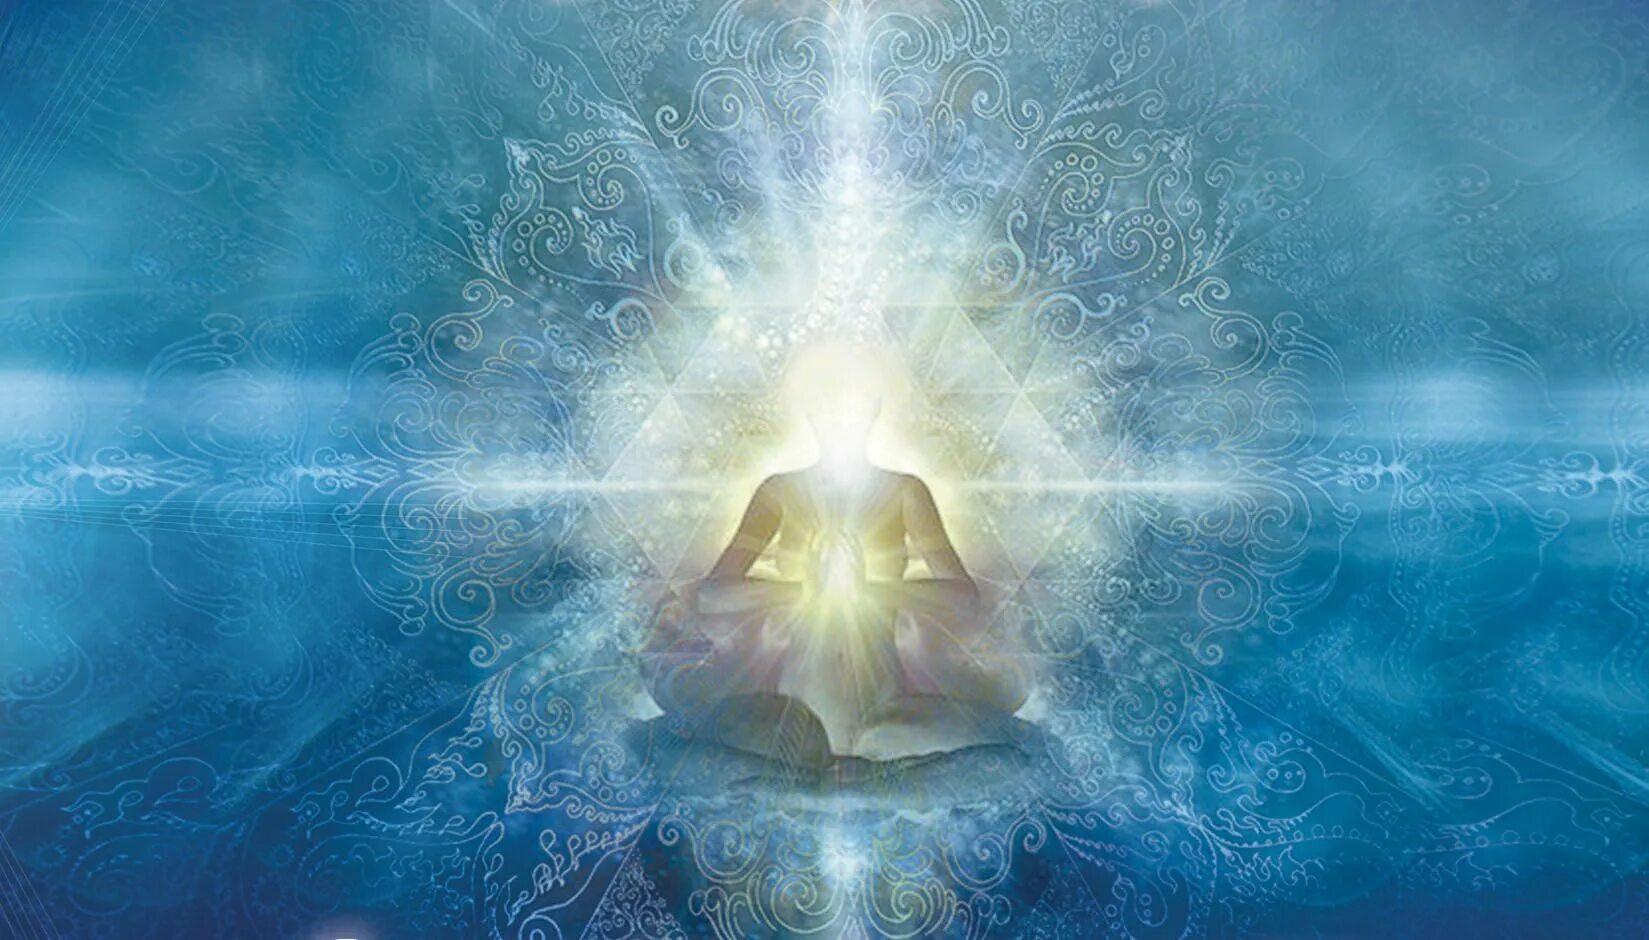 Книга жизнь бога. Крайон медитации мировая пирамида. Будда Атман. Божественный свет. Божественный свет в человеке.